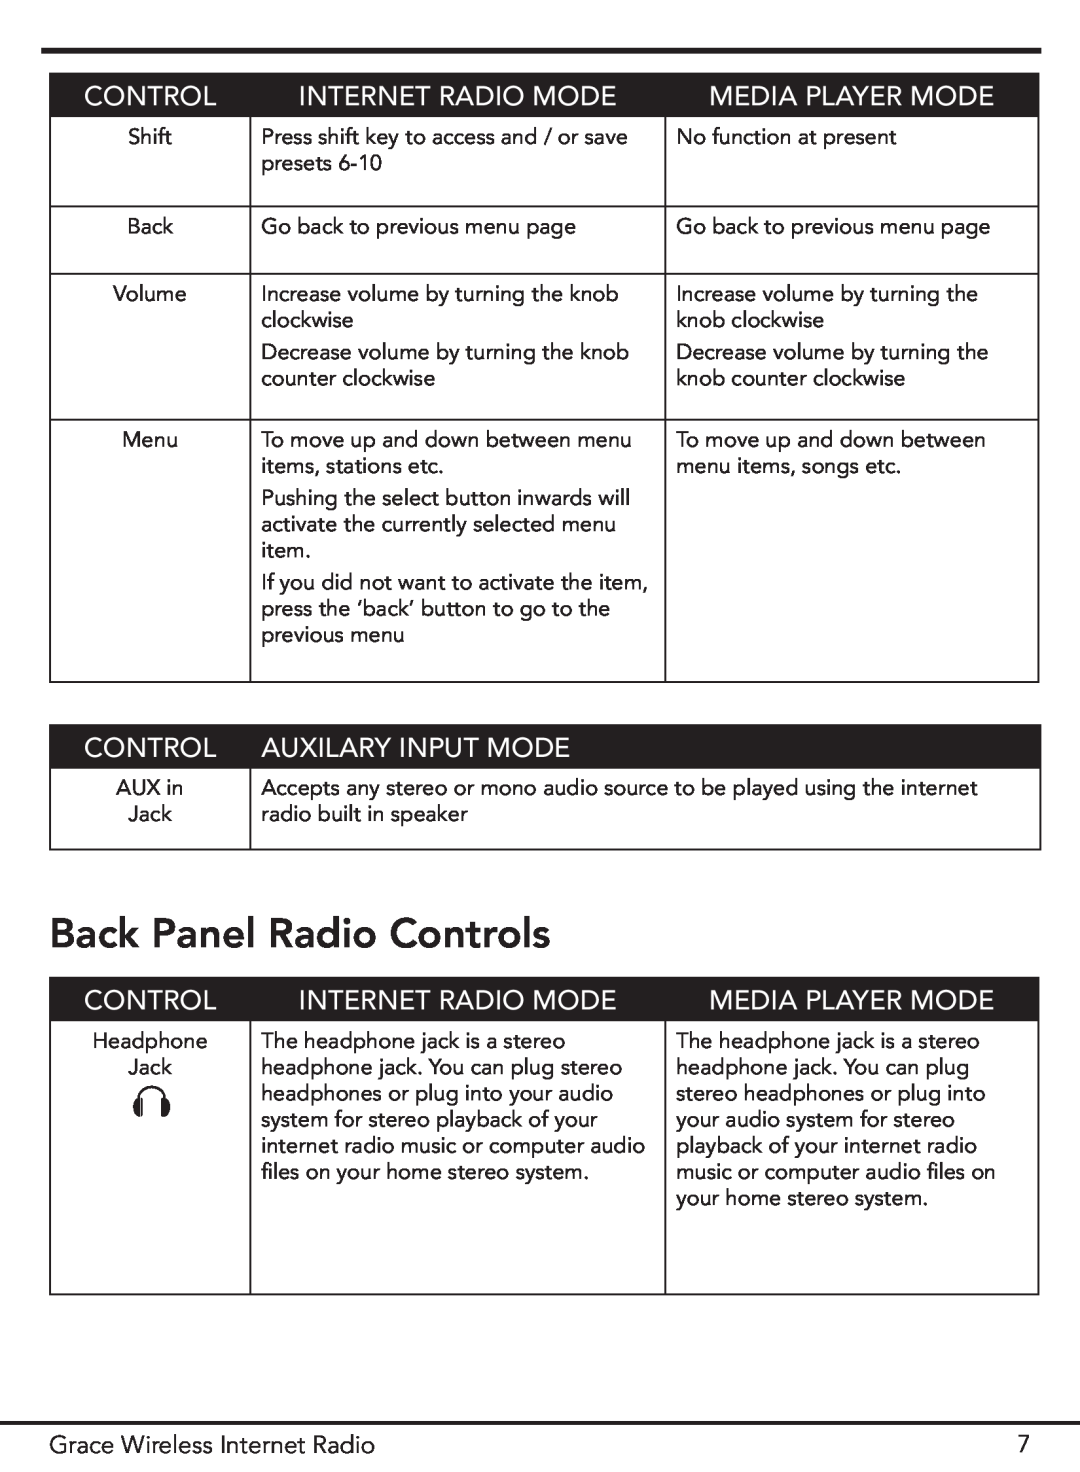 Grace GDI-IR2000 manual Back Panel Radio Controls, Auxilary Input Mode, Internet Radio Mode, Media Player Mode 